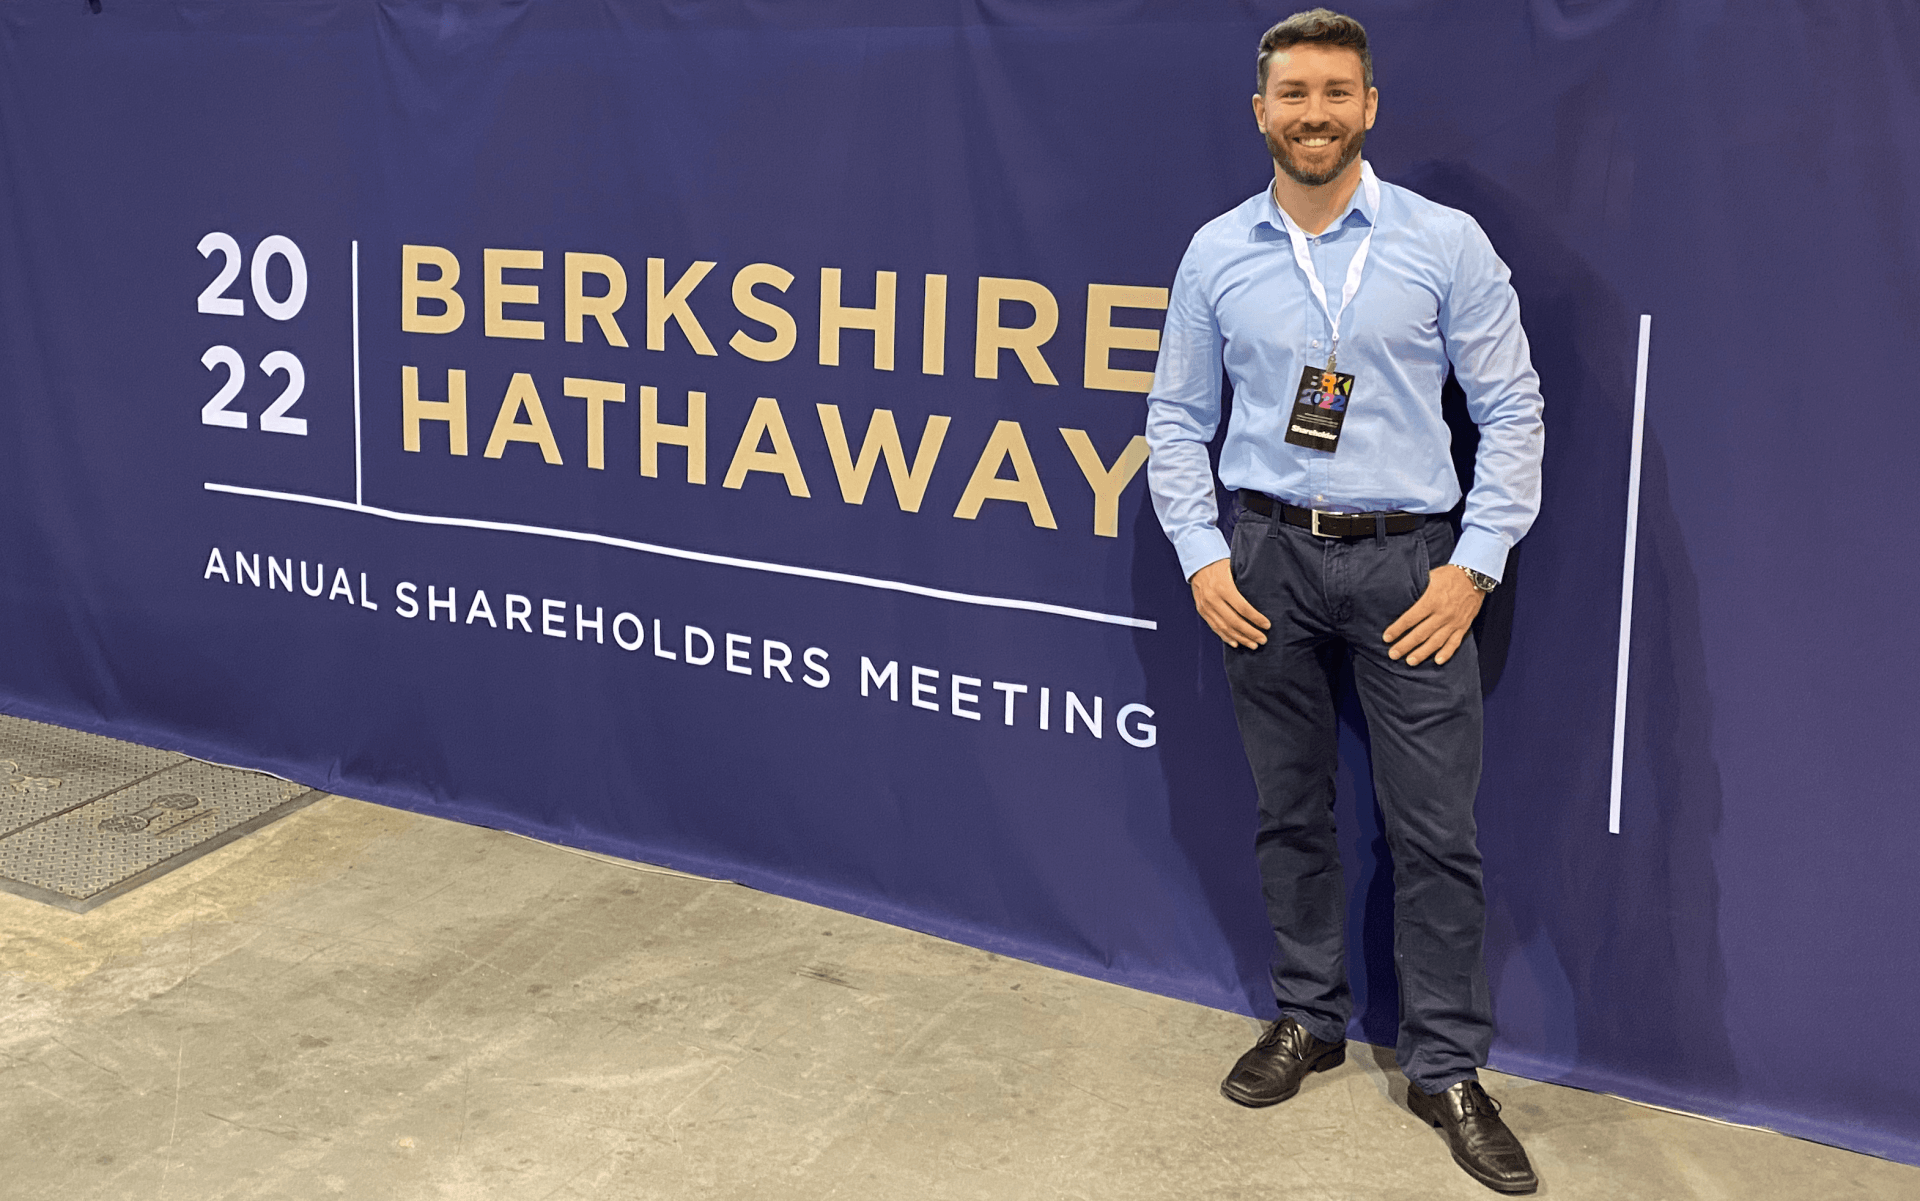 Olivier Estoppey vor dem Plakat Berkshire Hathaway 2022 Annual Shareholders Meeting